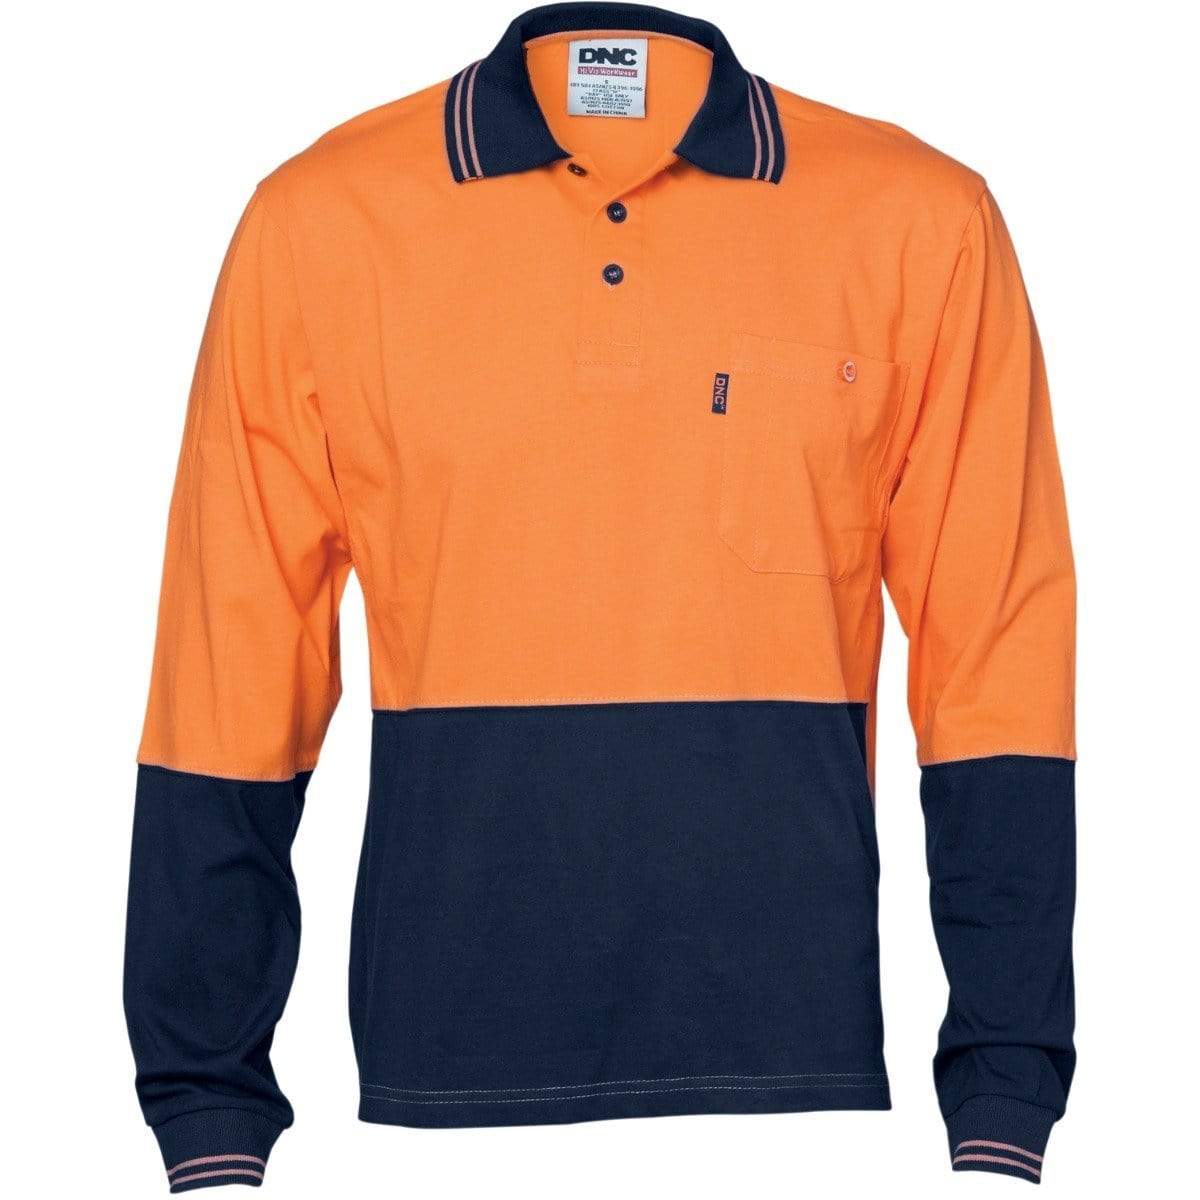 DNC Workwear Work Wear Orange/Navy / XS DNC WORKWEAR Hi-Vis Cool-Breeze Cotton Jersey Long Sleeve Polo Shirt with Underarm Cotton Mesh 3846